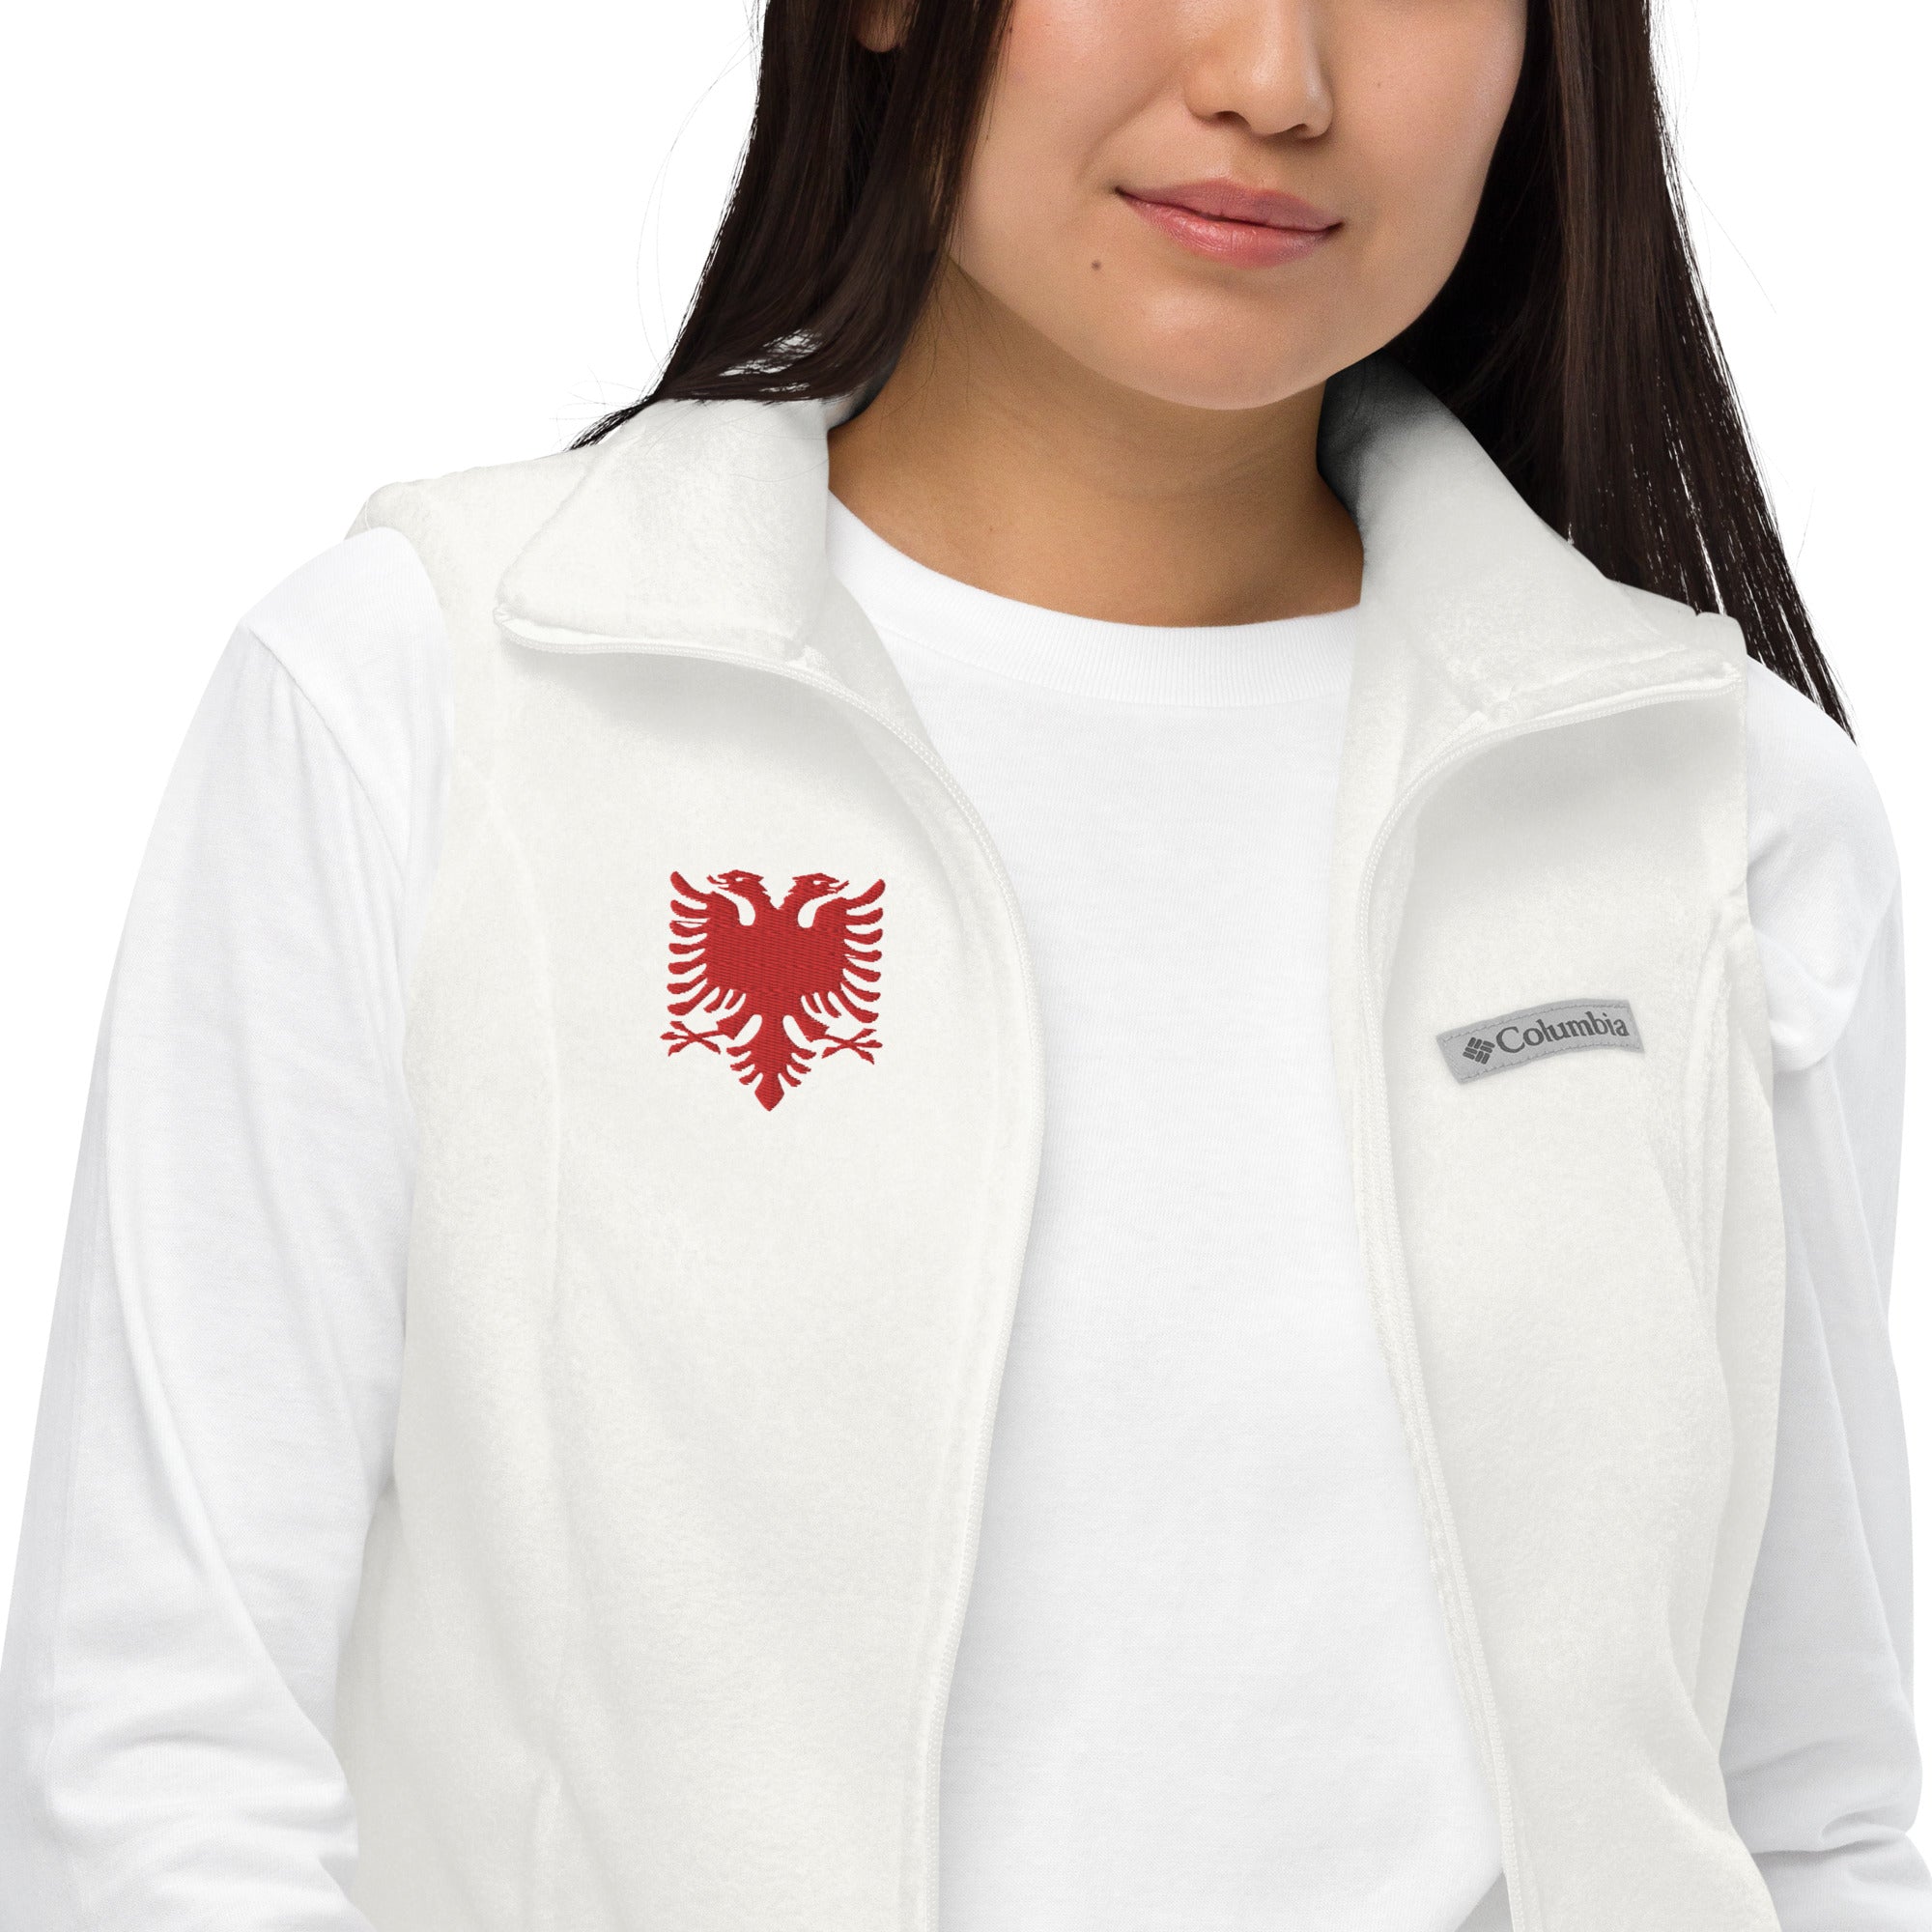 Women’s Columbia fleece vest | Albanian embroidered eagle